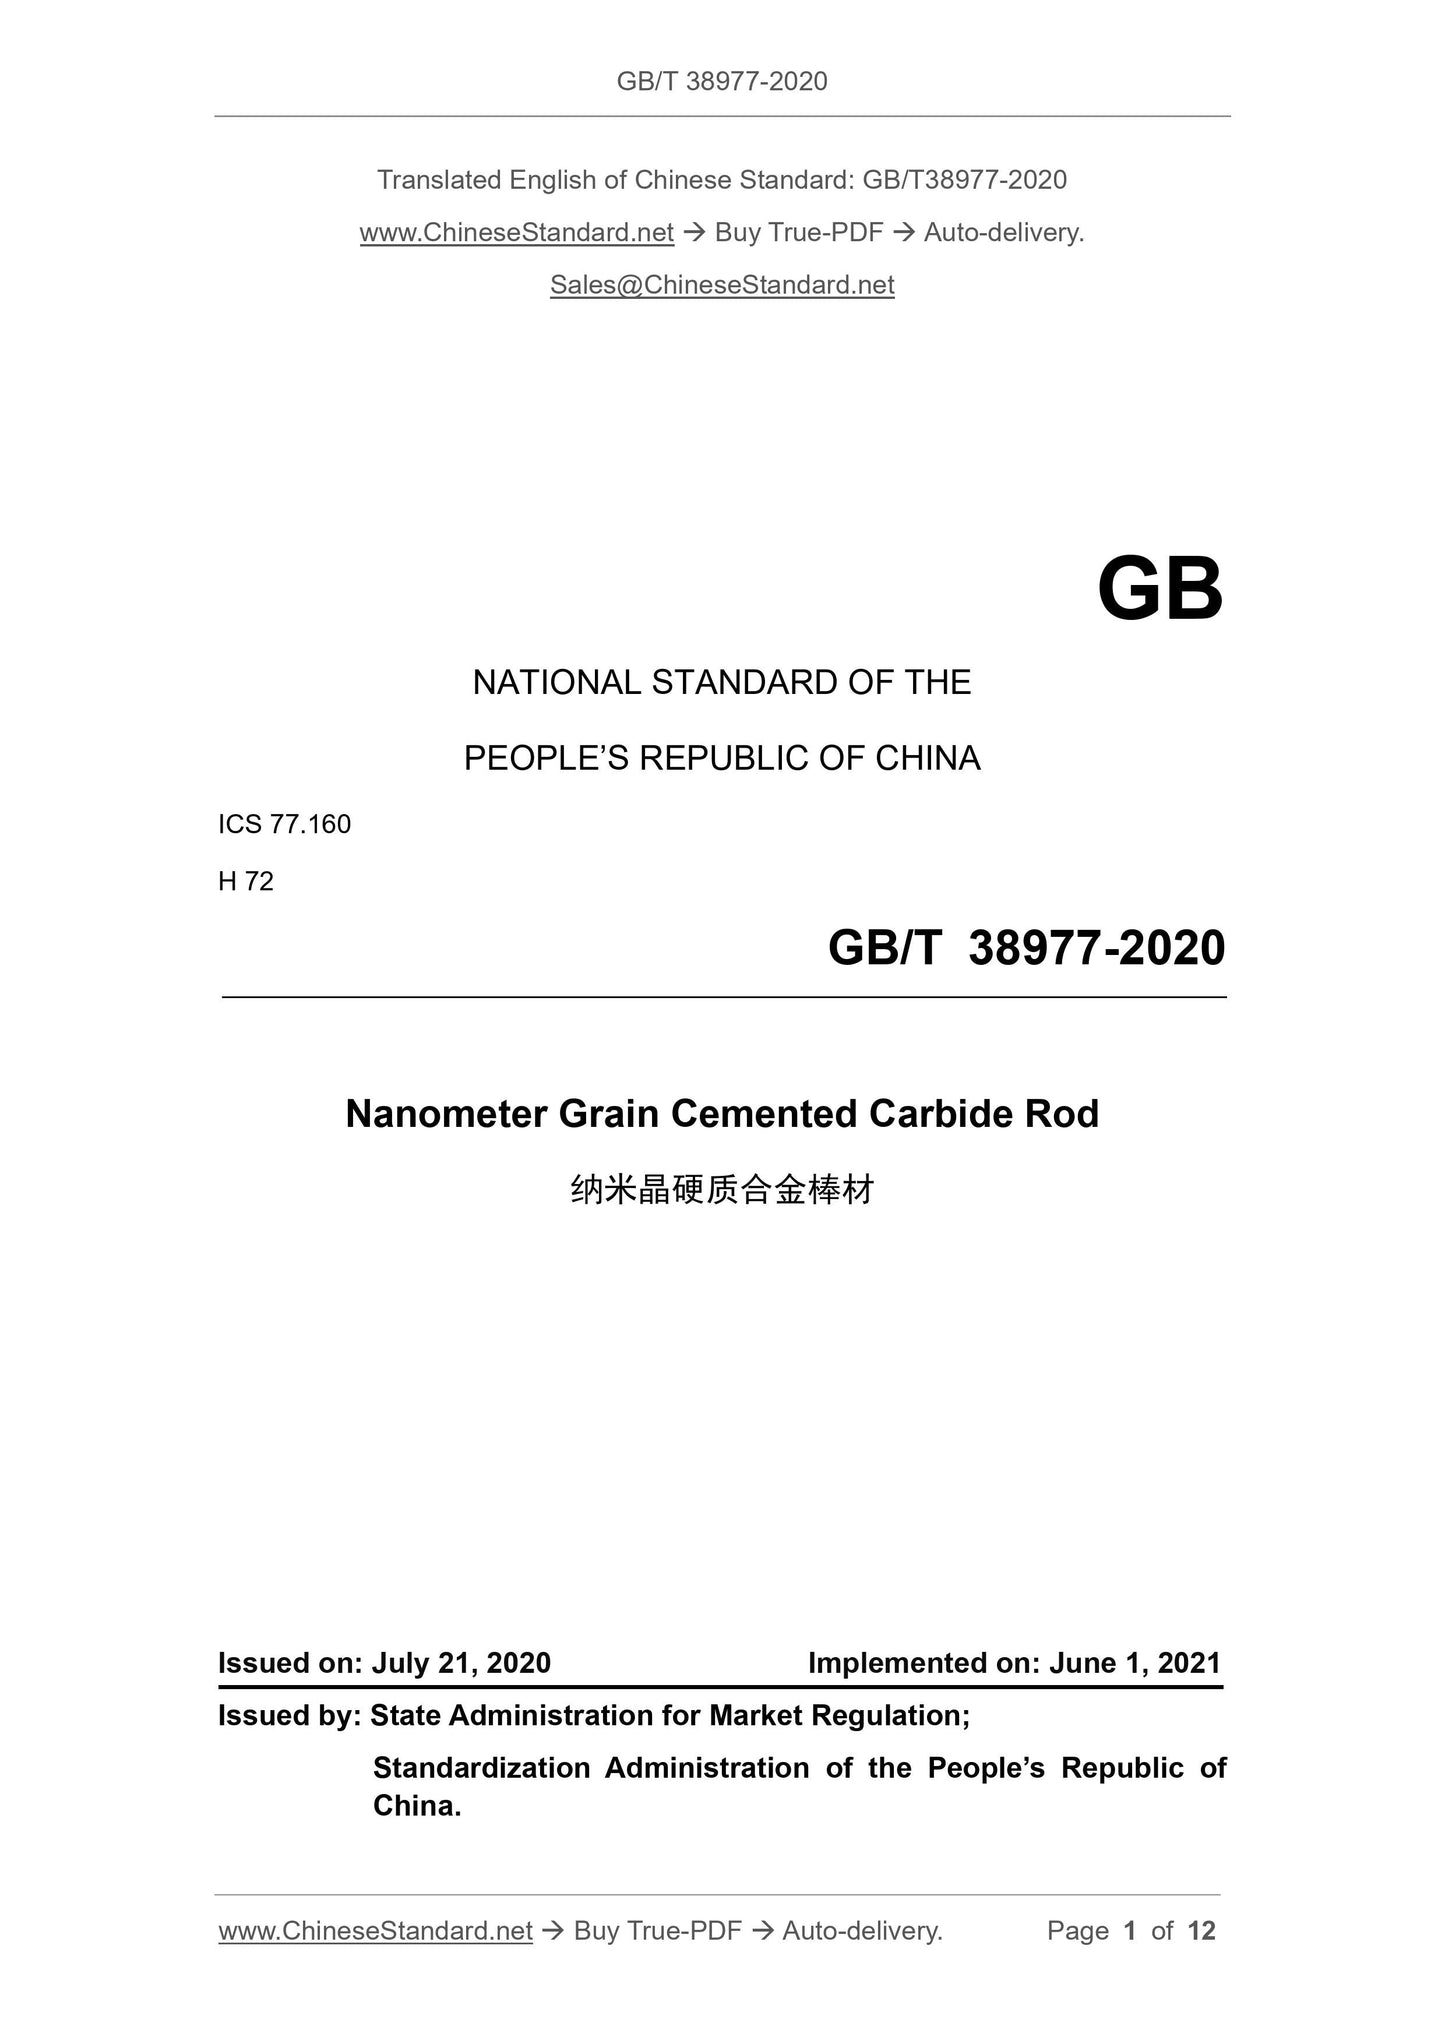 GBT38977-2020 Page 1